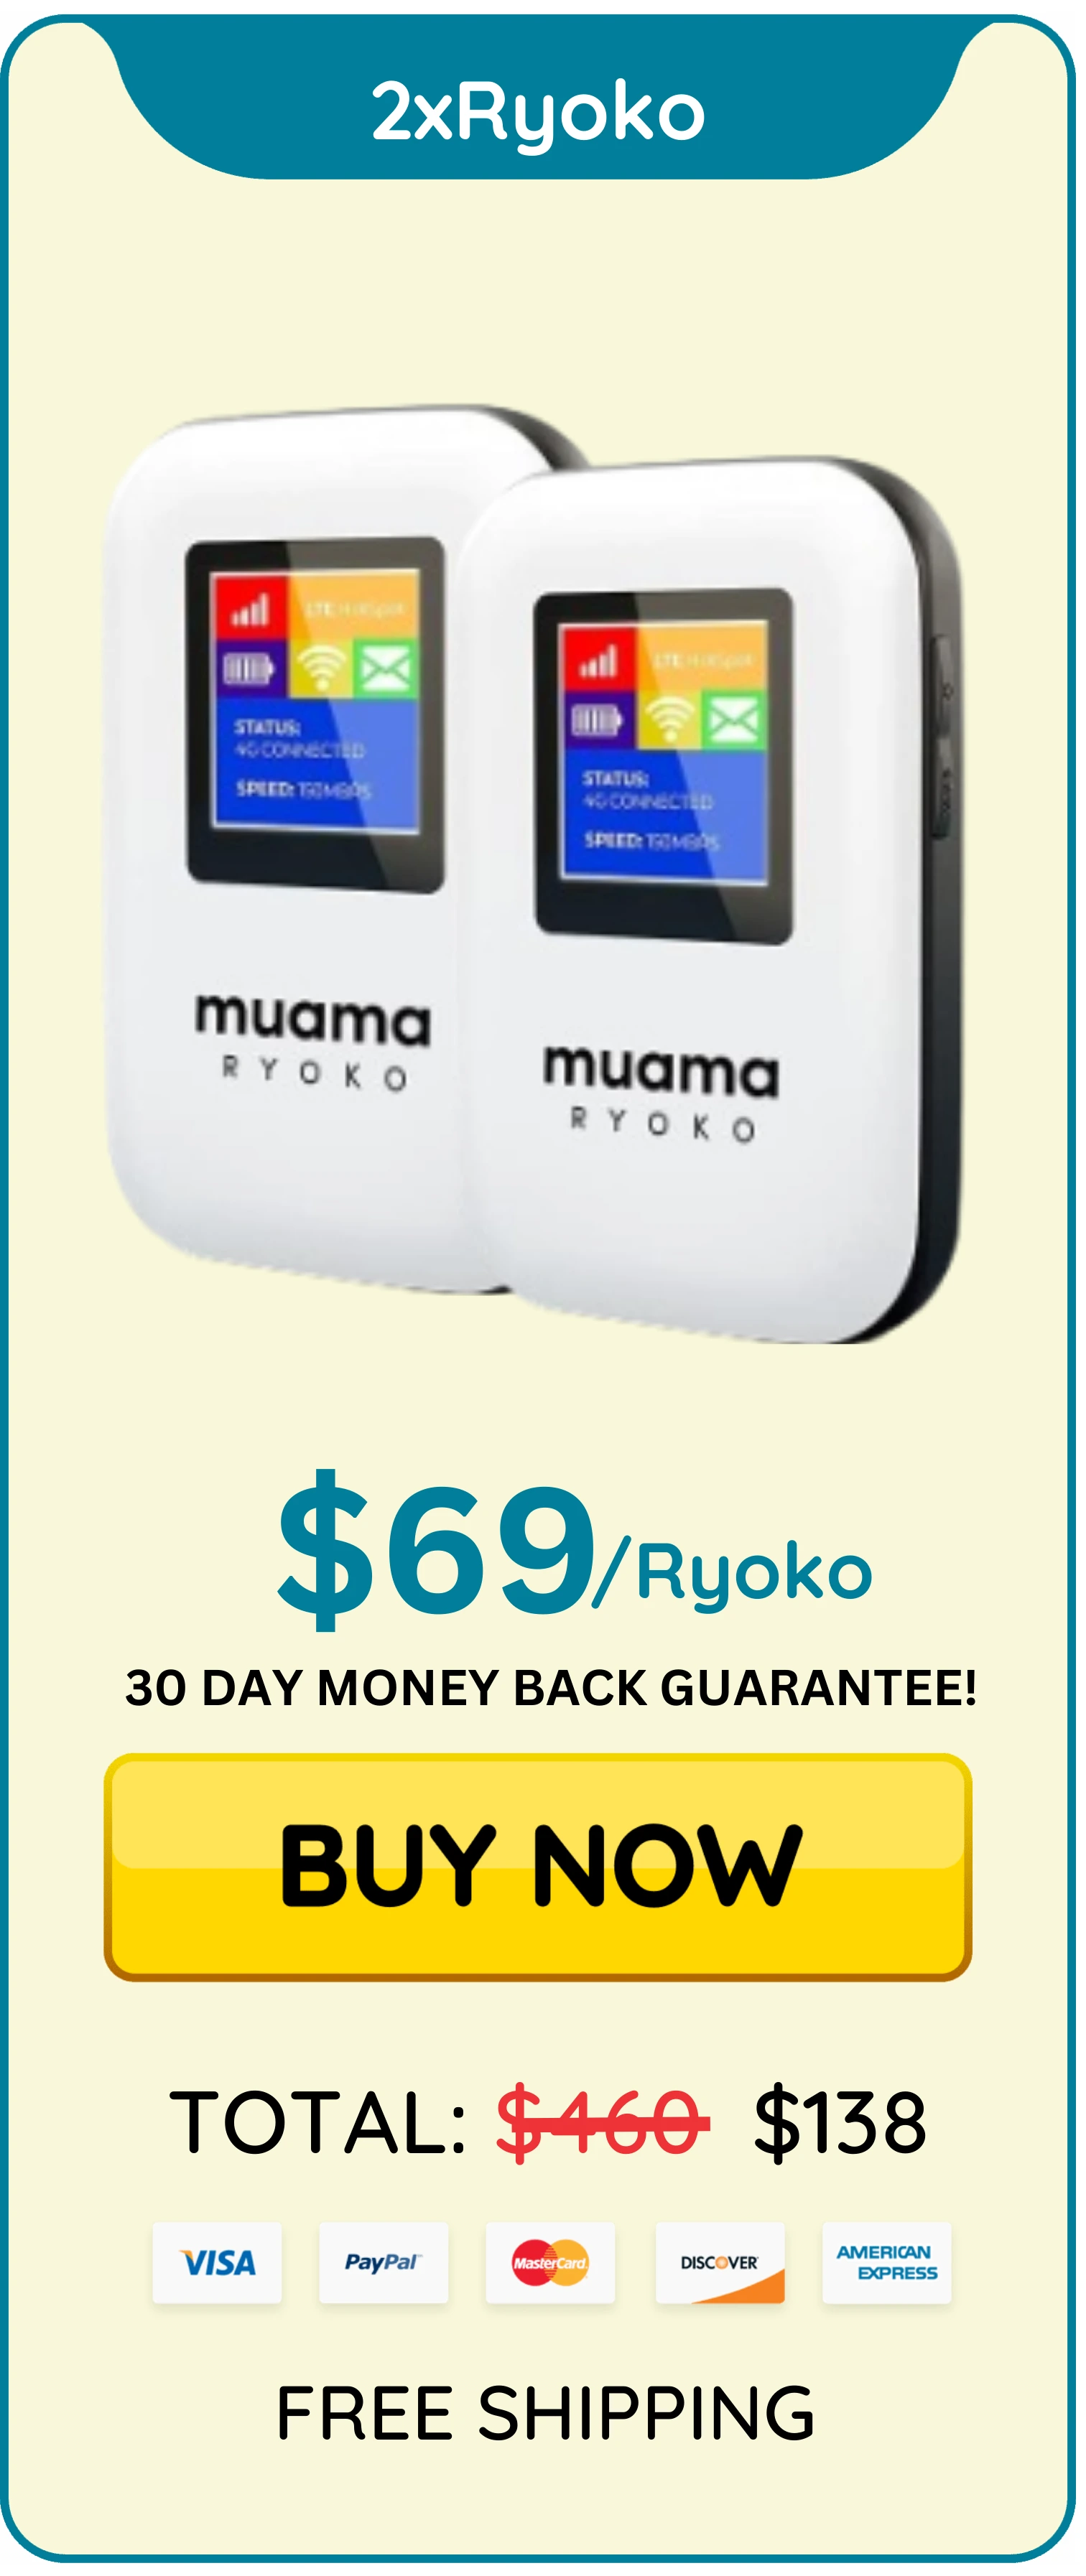 Muama ryoko package 3